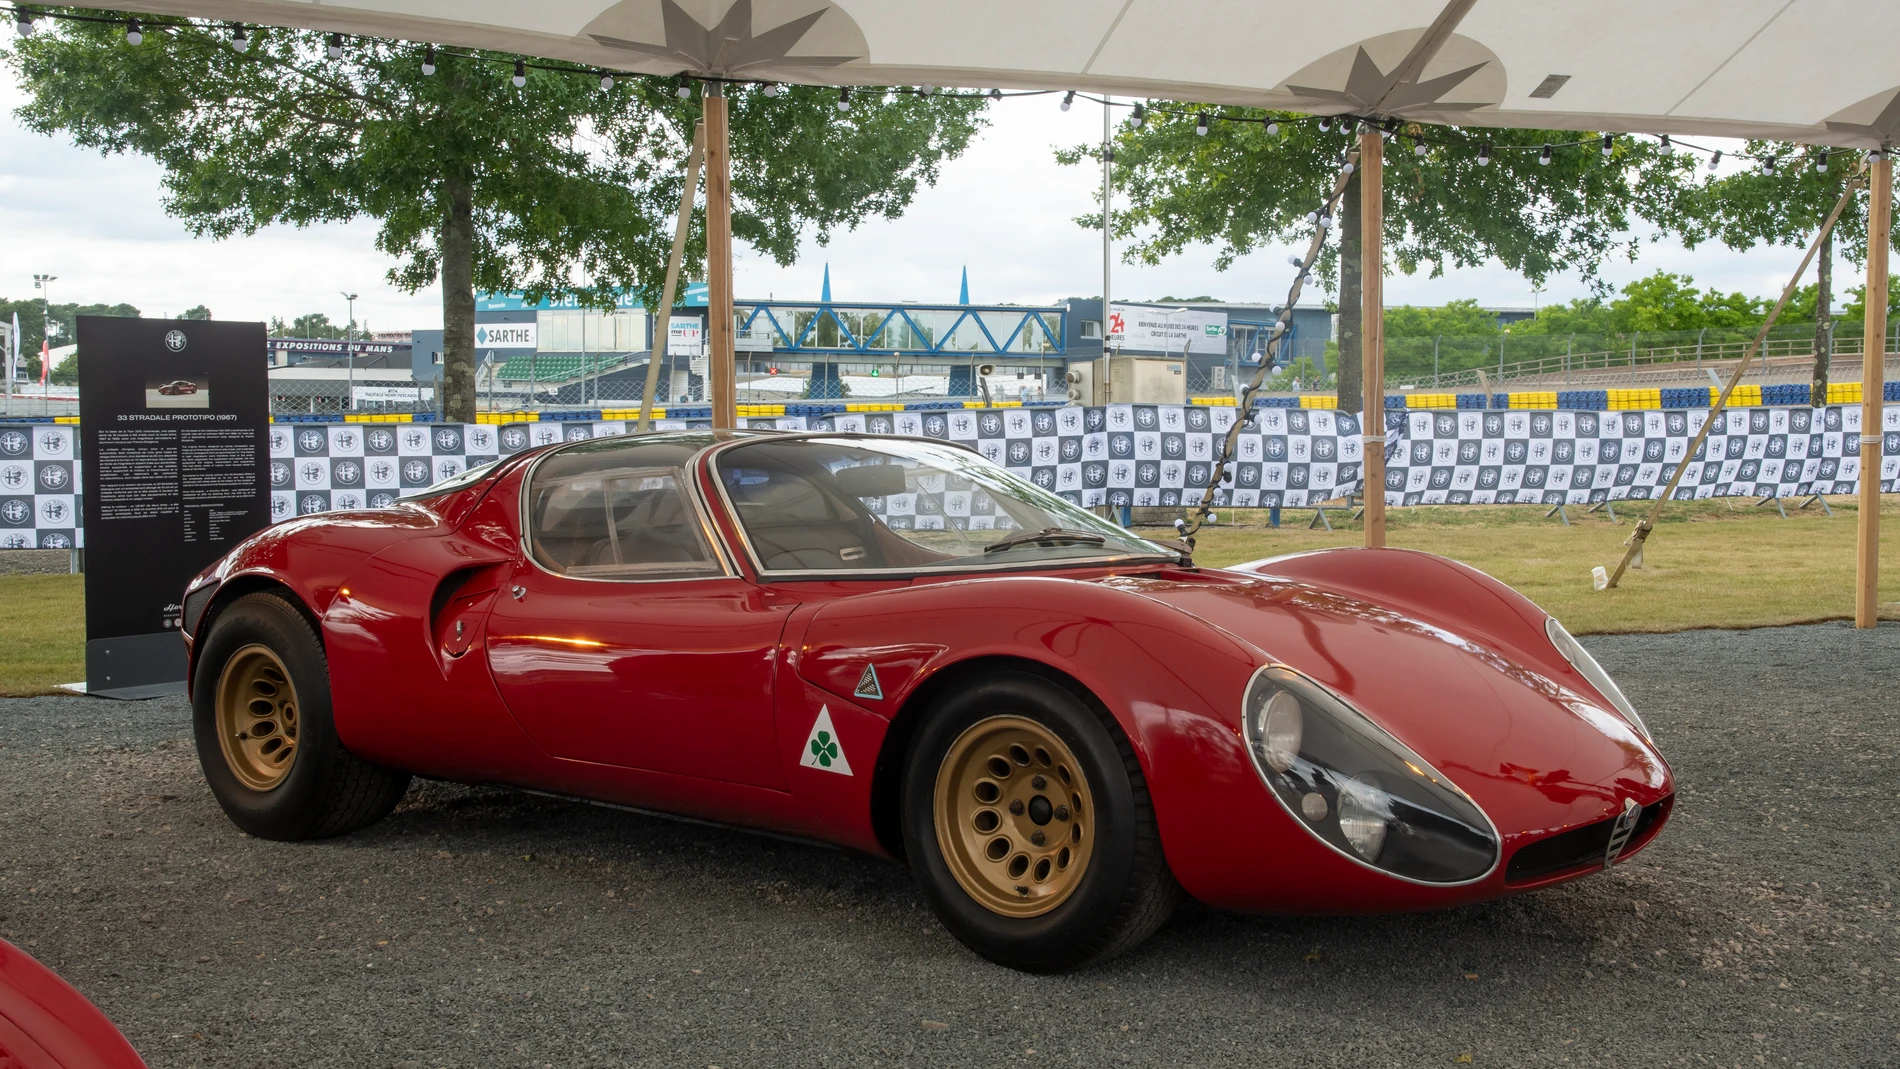 Quadrifoglio, el símbolo deportivo de Alfa Romeo cumple un siglo de vida